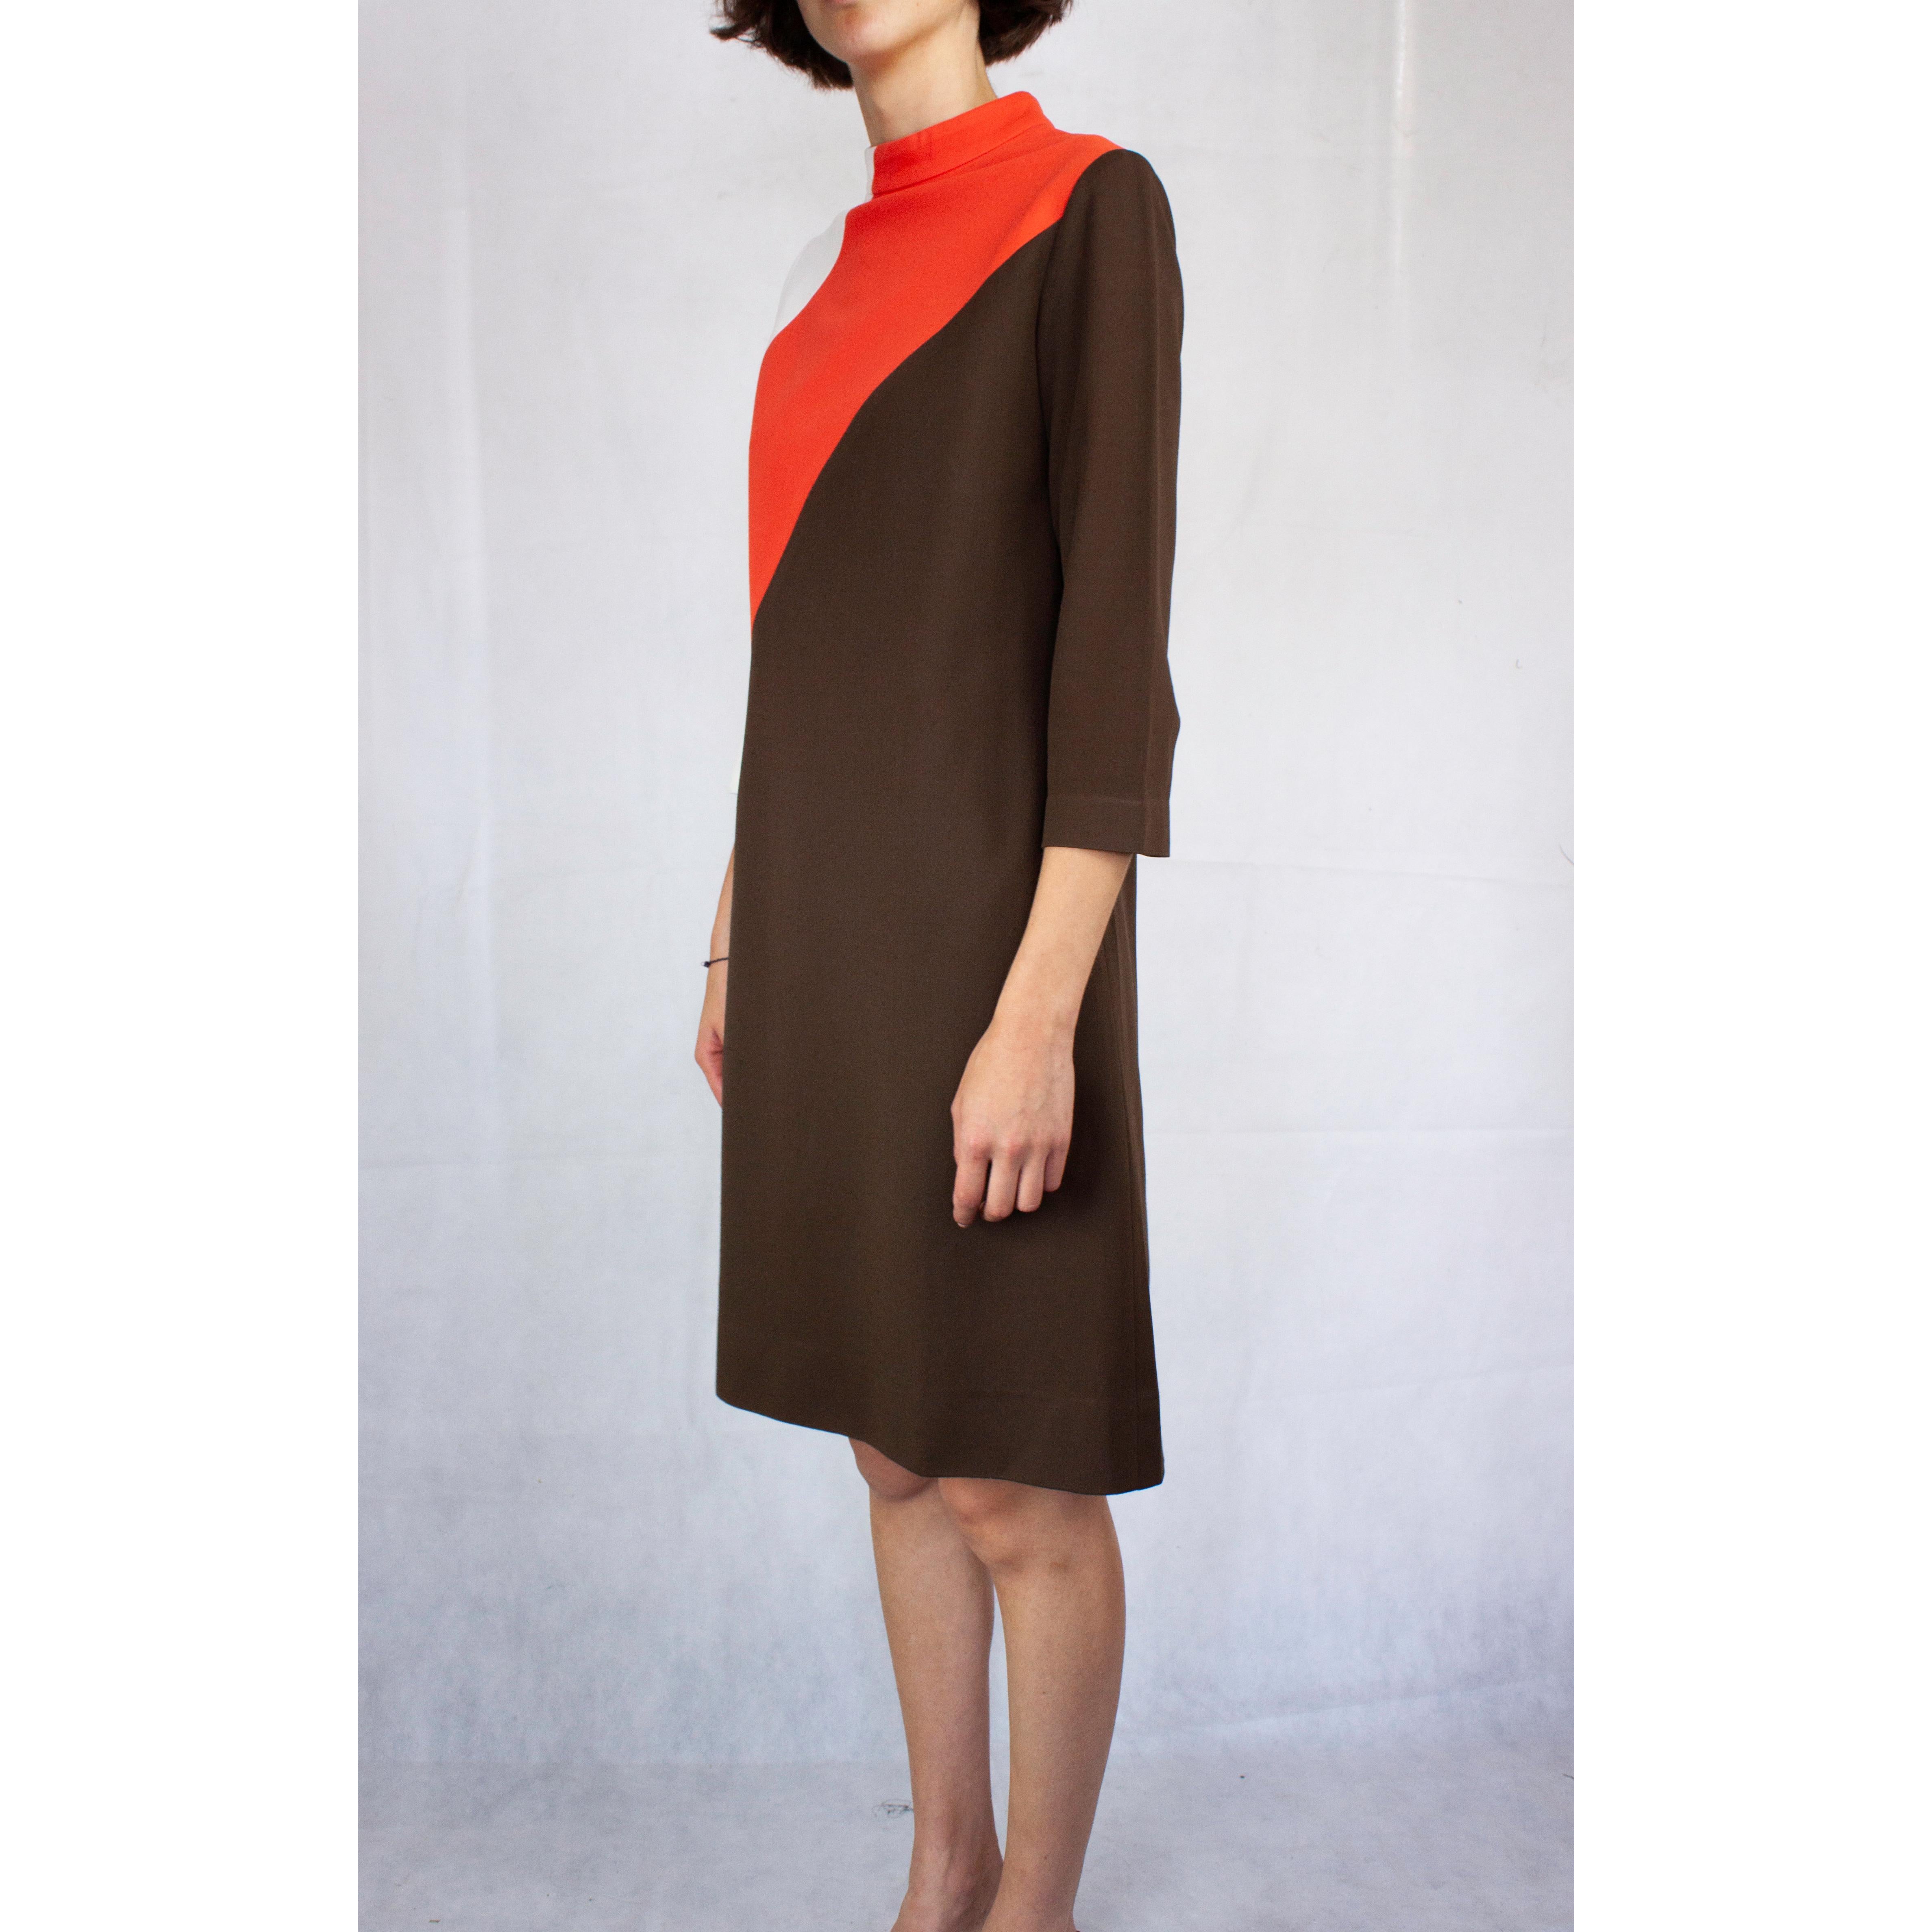 Pierre Cardin colour-block jersey dress. circa 1960s (Schwarz)